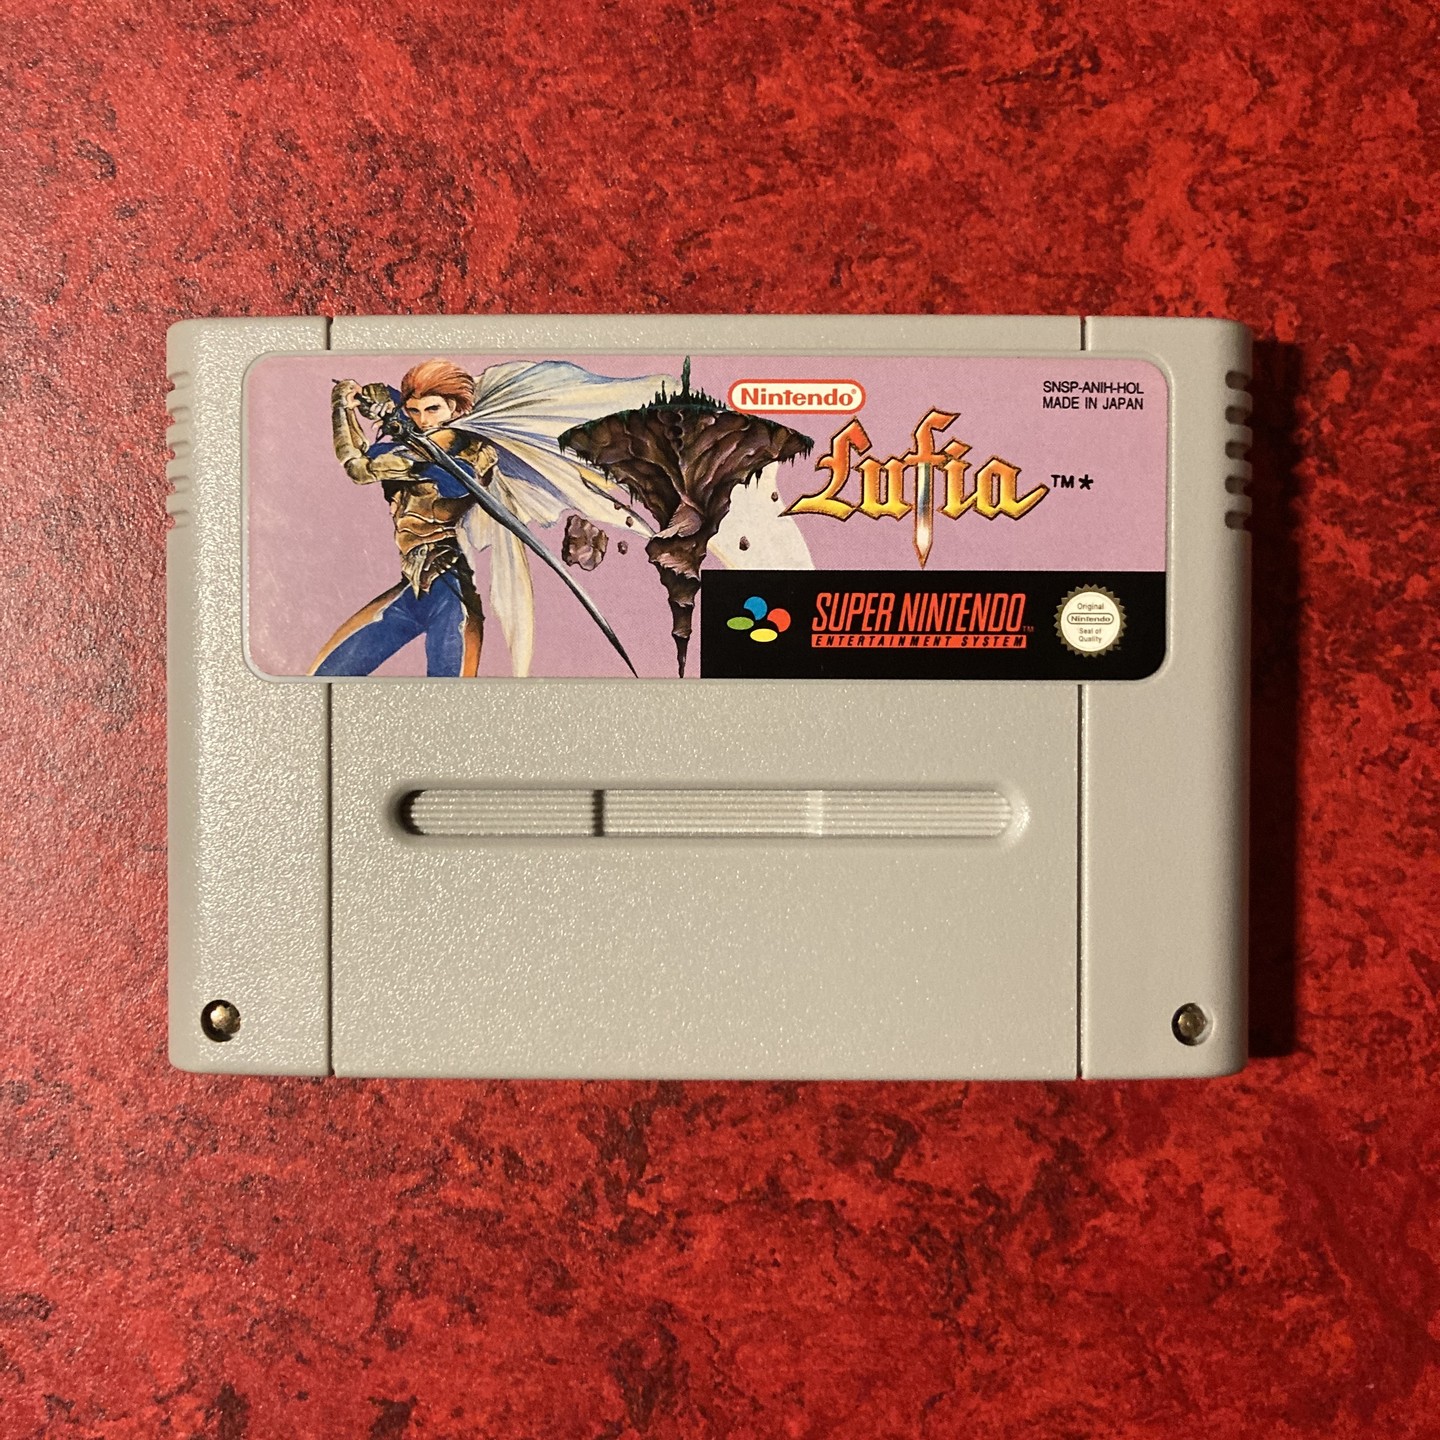 Lufia – PAL version (Super Nintendo)